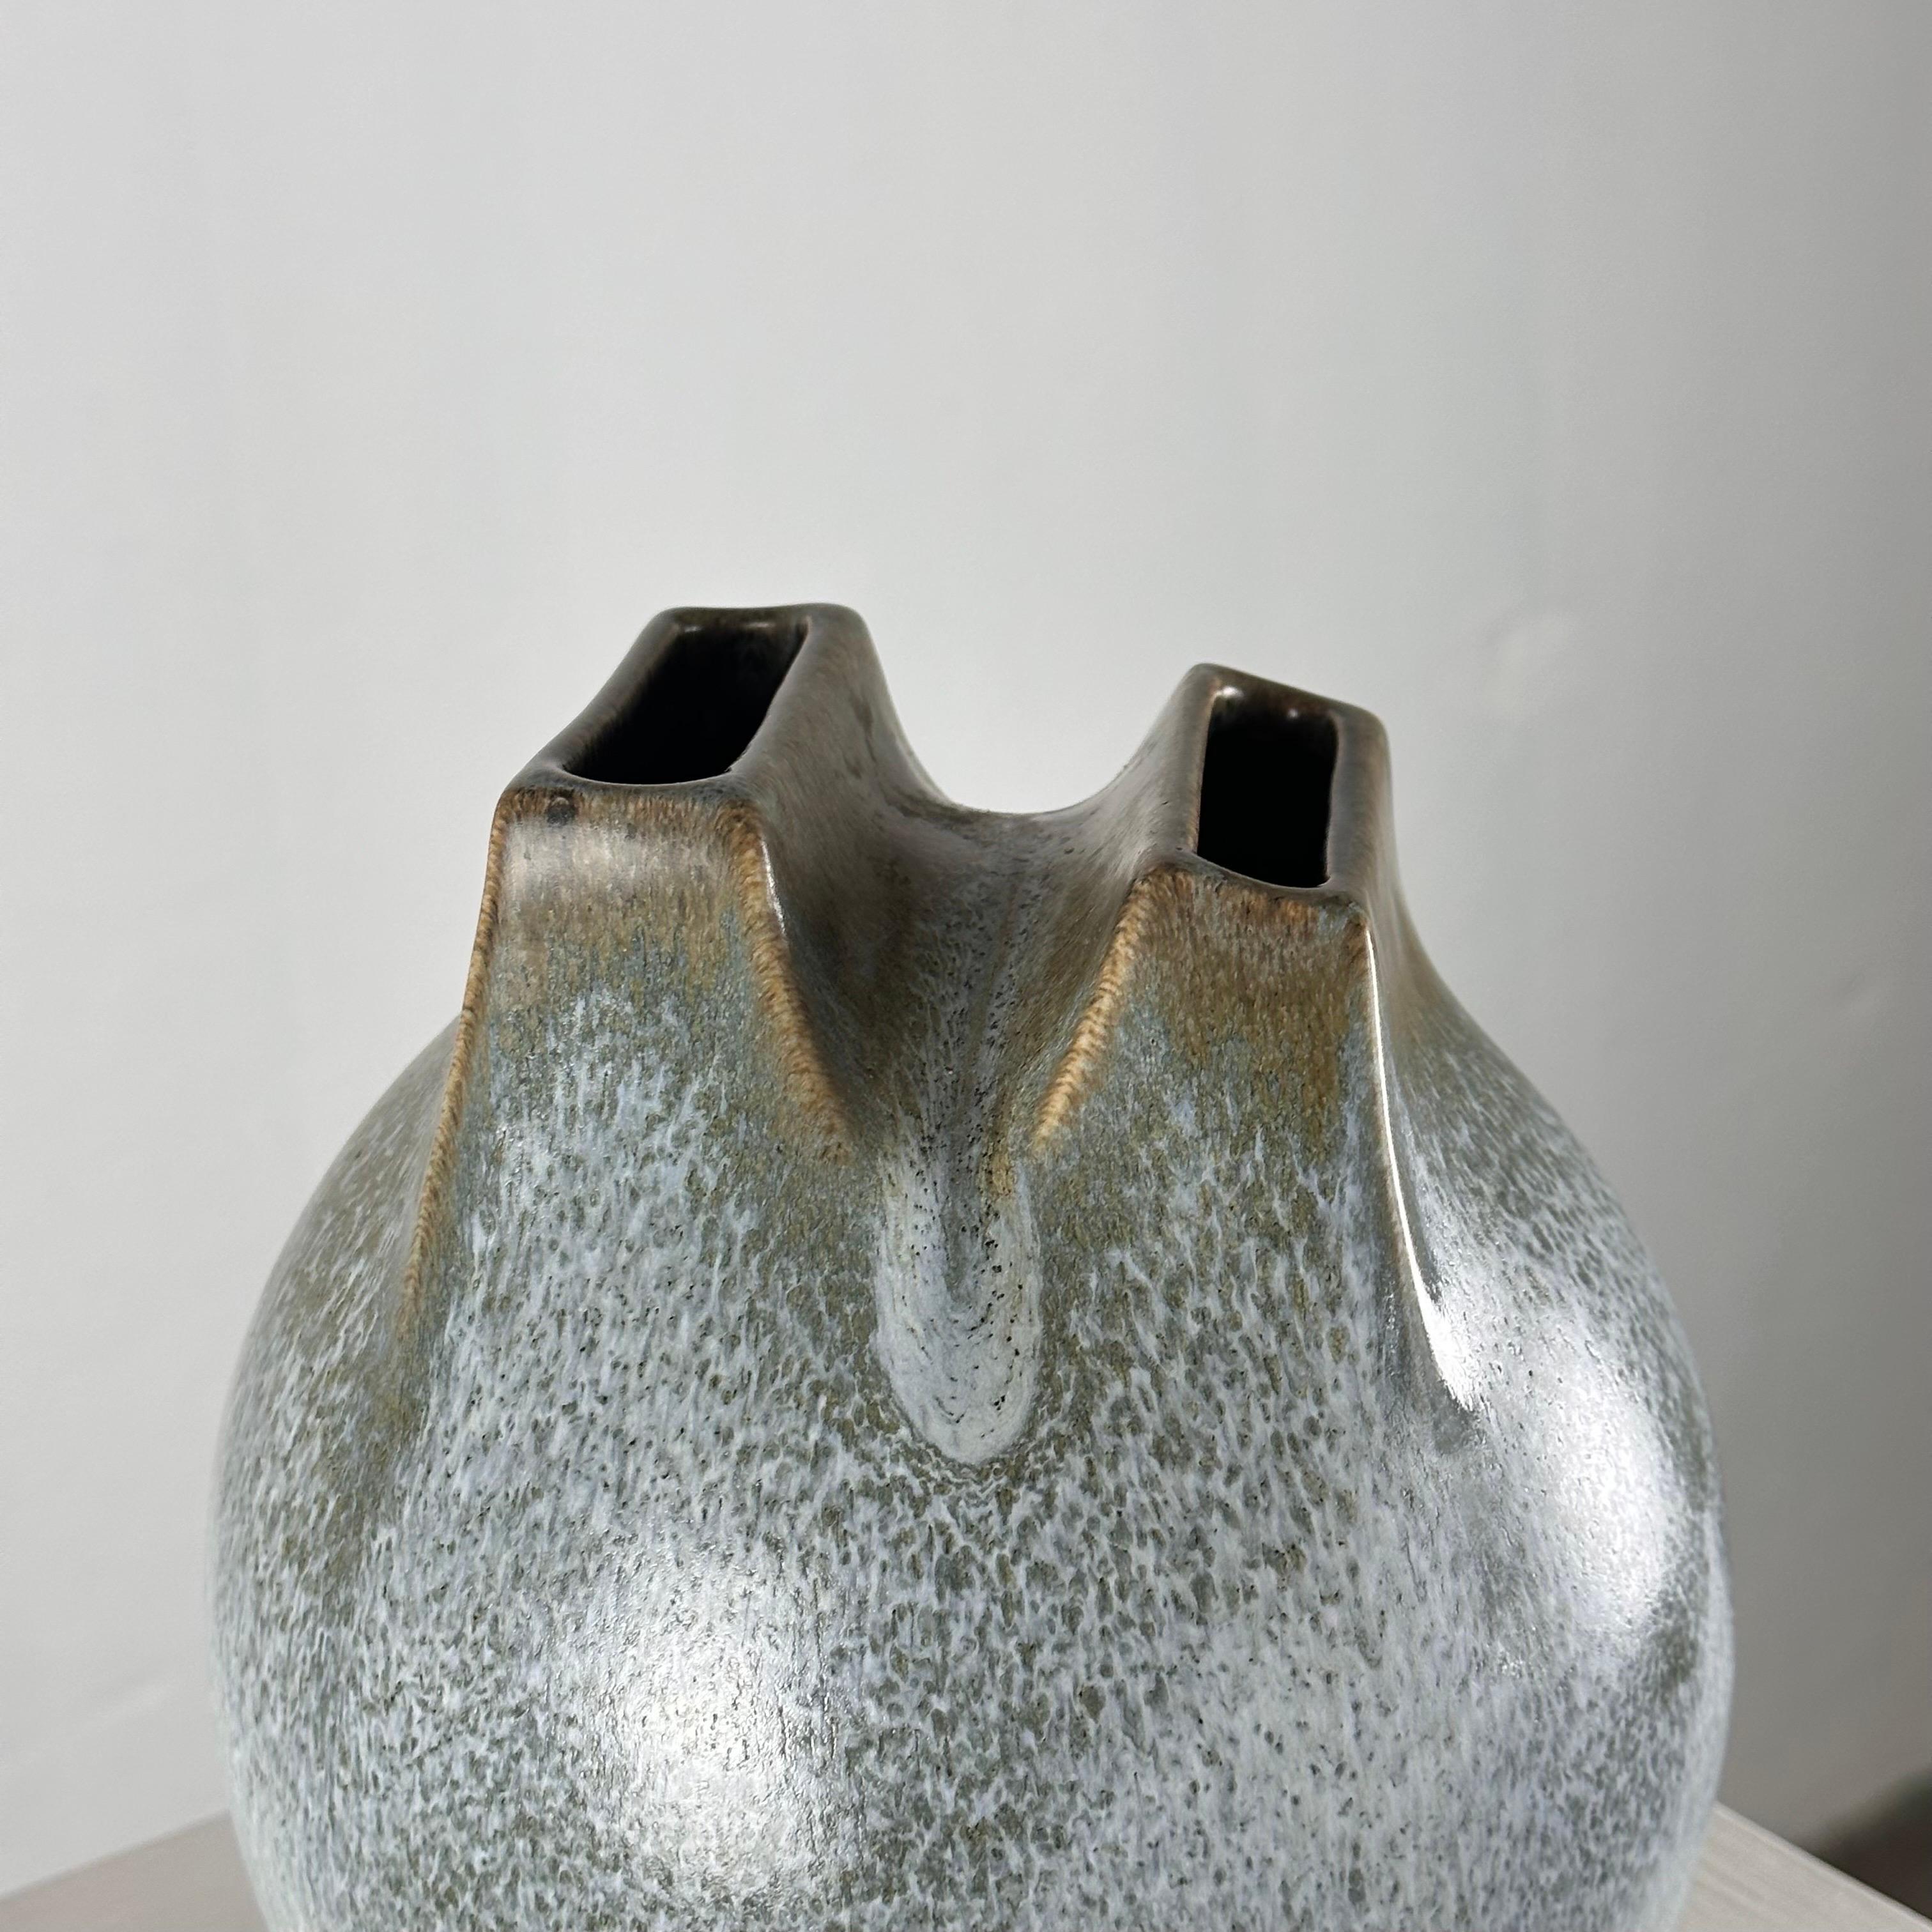 Unique 1970s Franco Bucci Ceramic Vase: 'Whistle' with Two Mouths For Sale 3